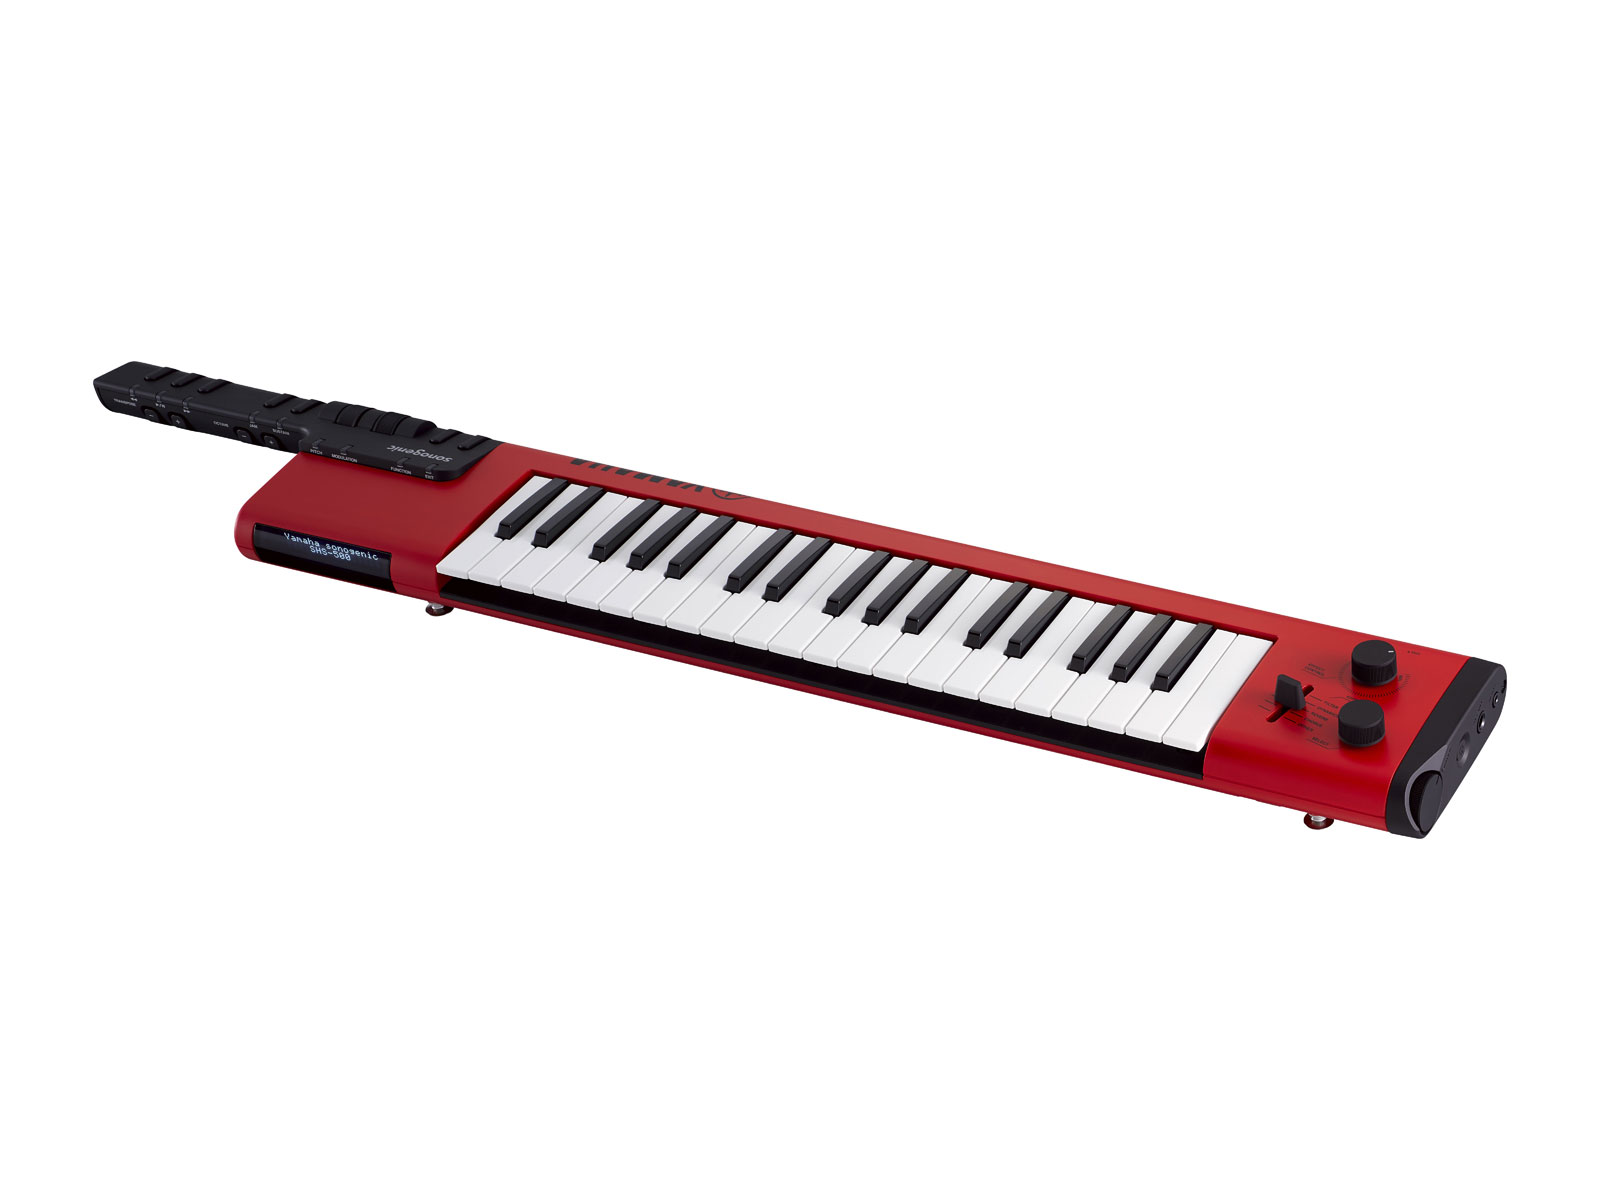 Yamaha Shs 500 Red - Entertainer Keyboard - Variation 1